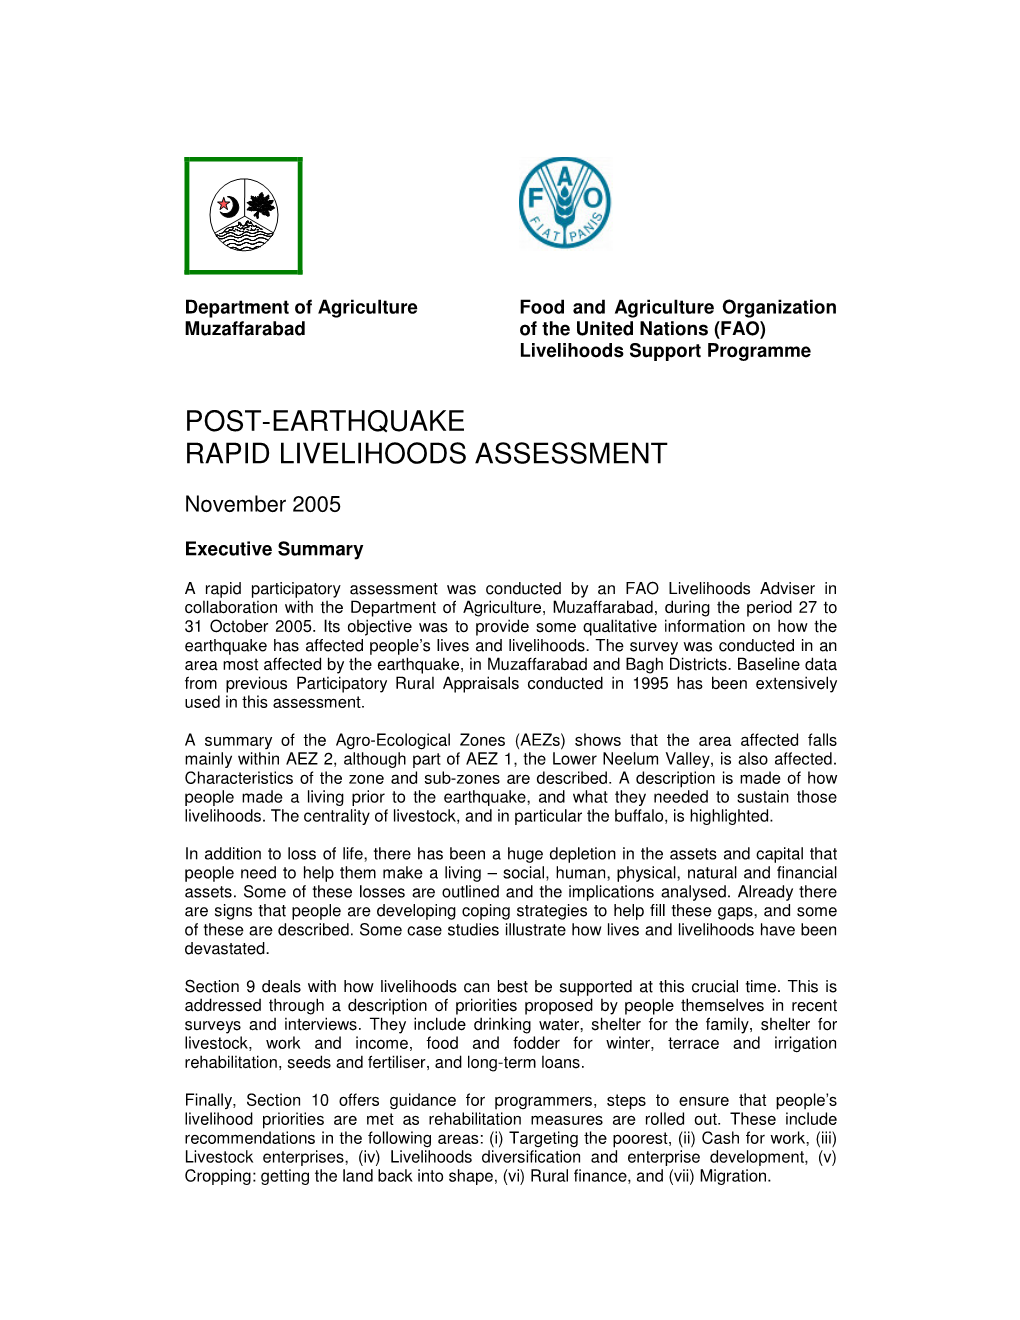 Post-Earthquake Rapid Livelihoods Assessment